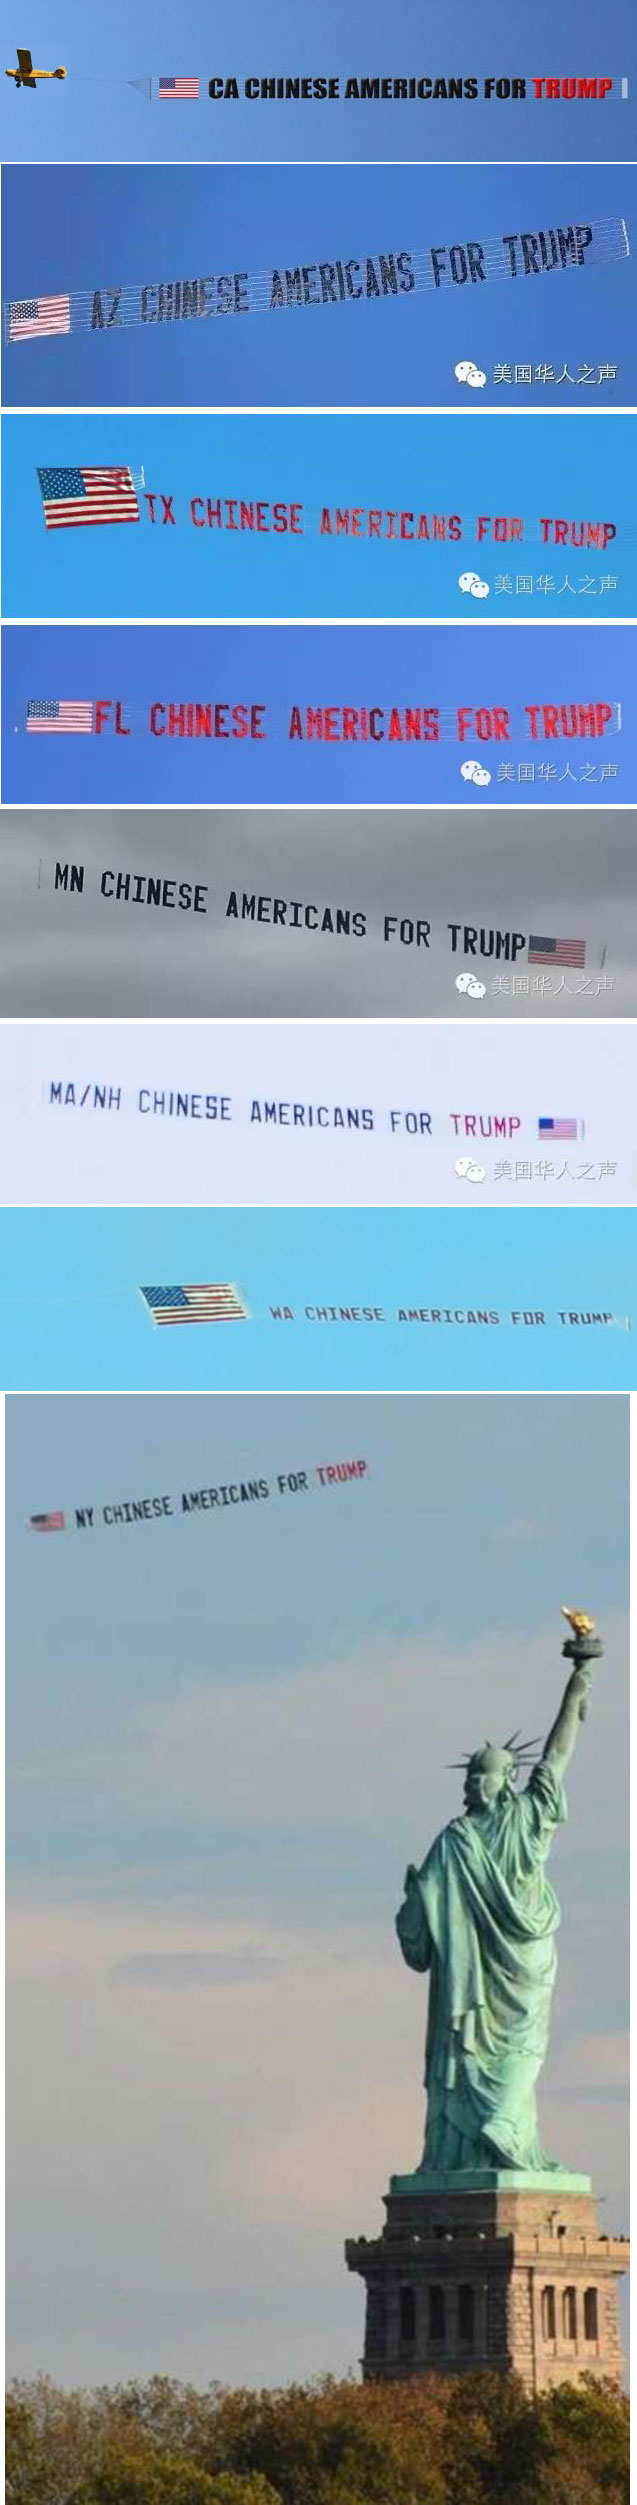 Chinese4Trump Flight Banners